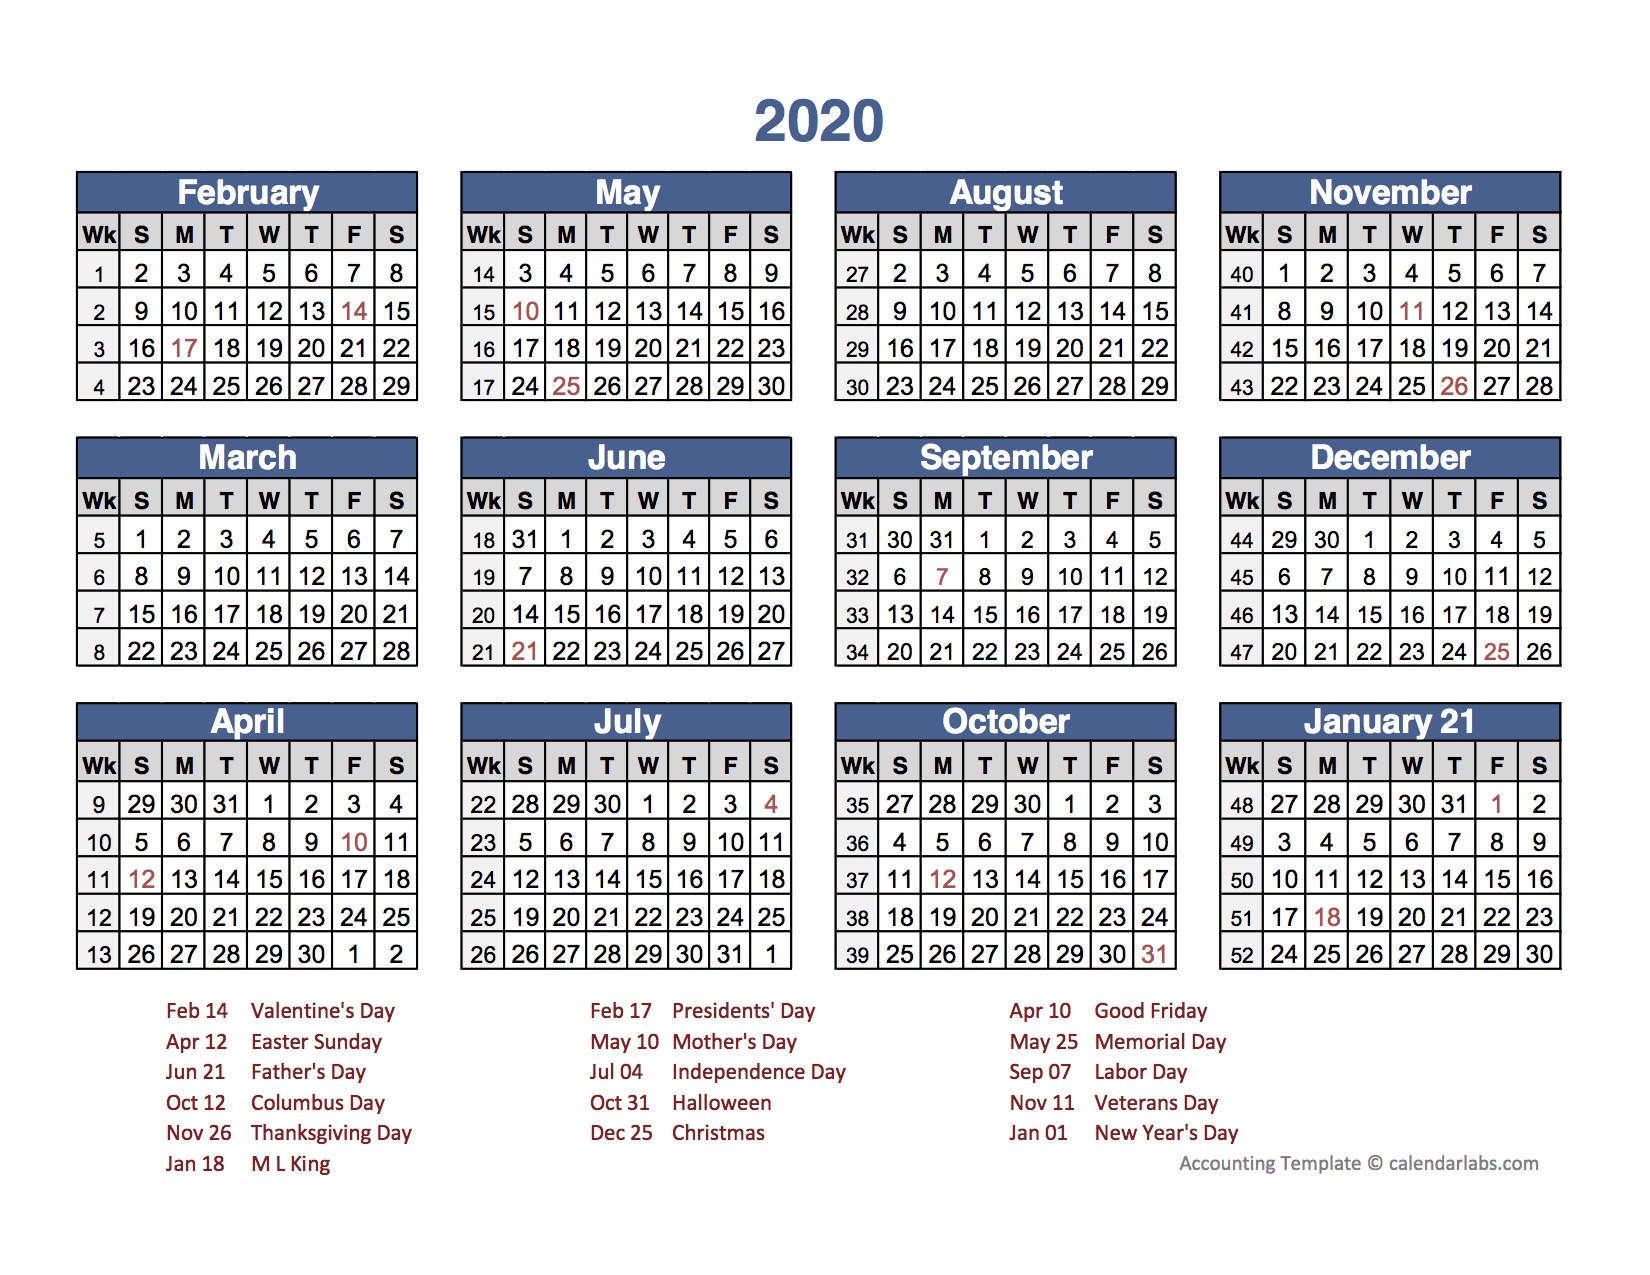 2020 Retail Accounting Calendar 4-4-5 - Free Printable Templates